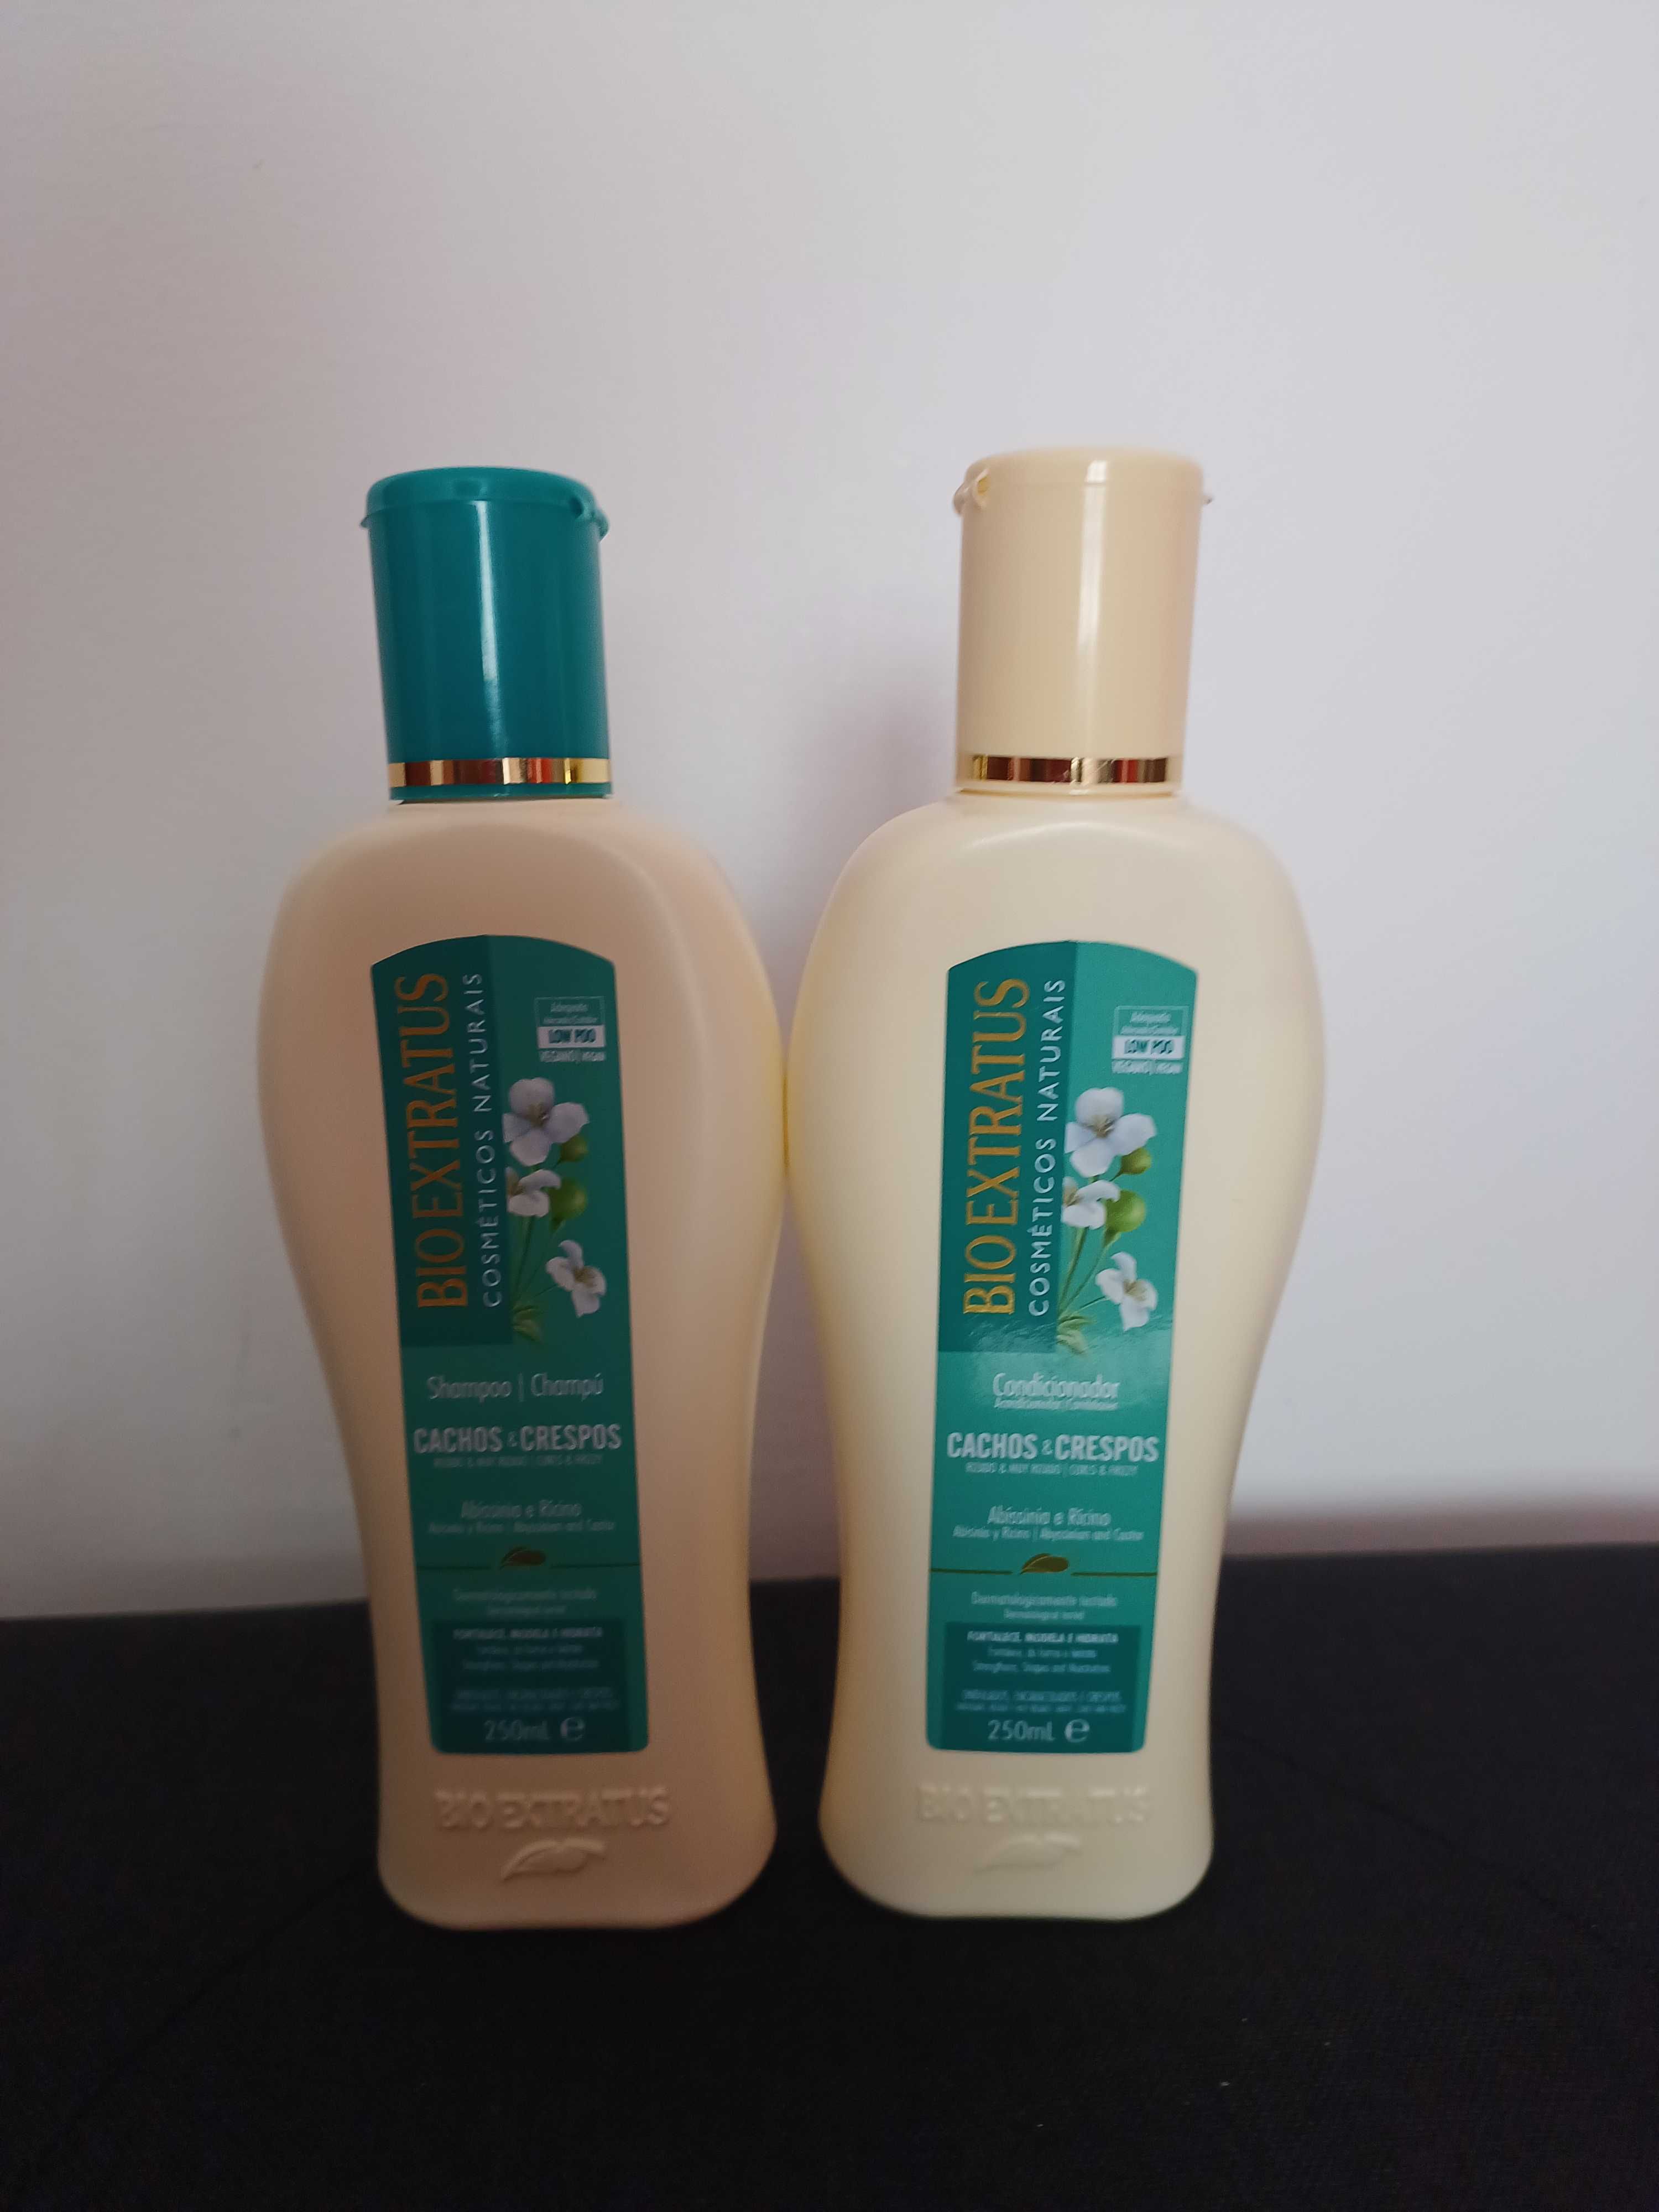 Shampoo & Condicionador Cachos e Crespos da Bioextratus